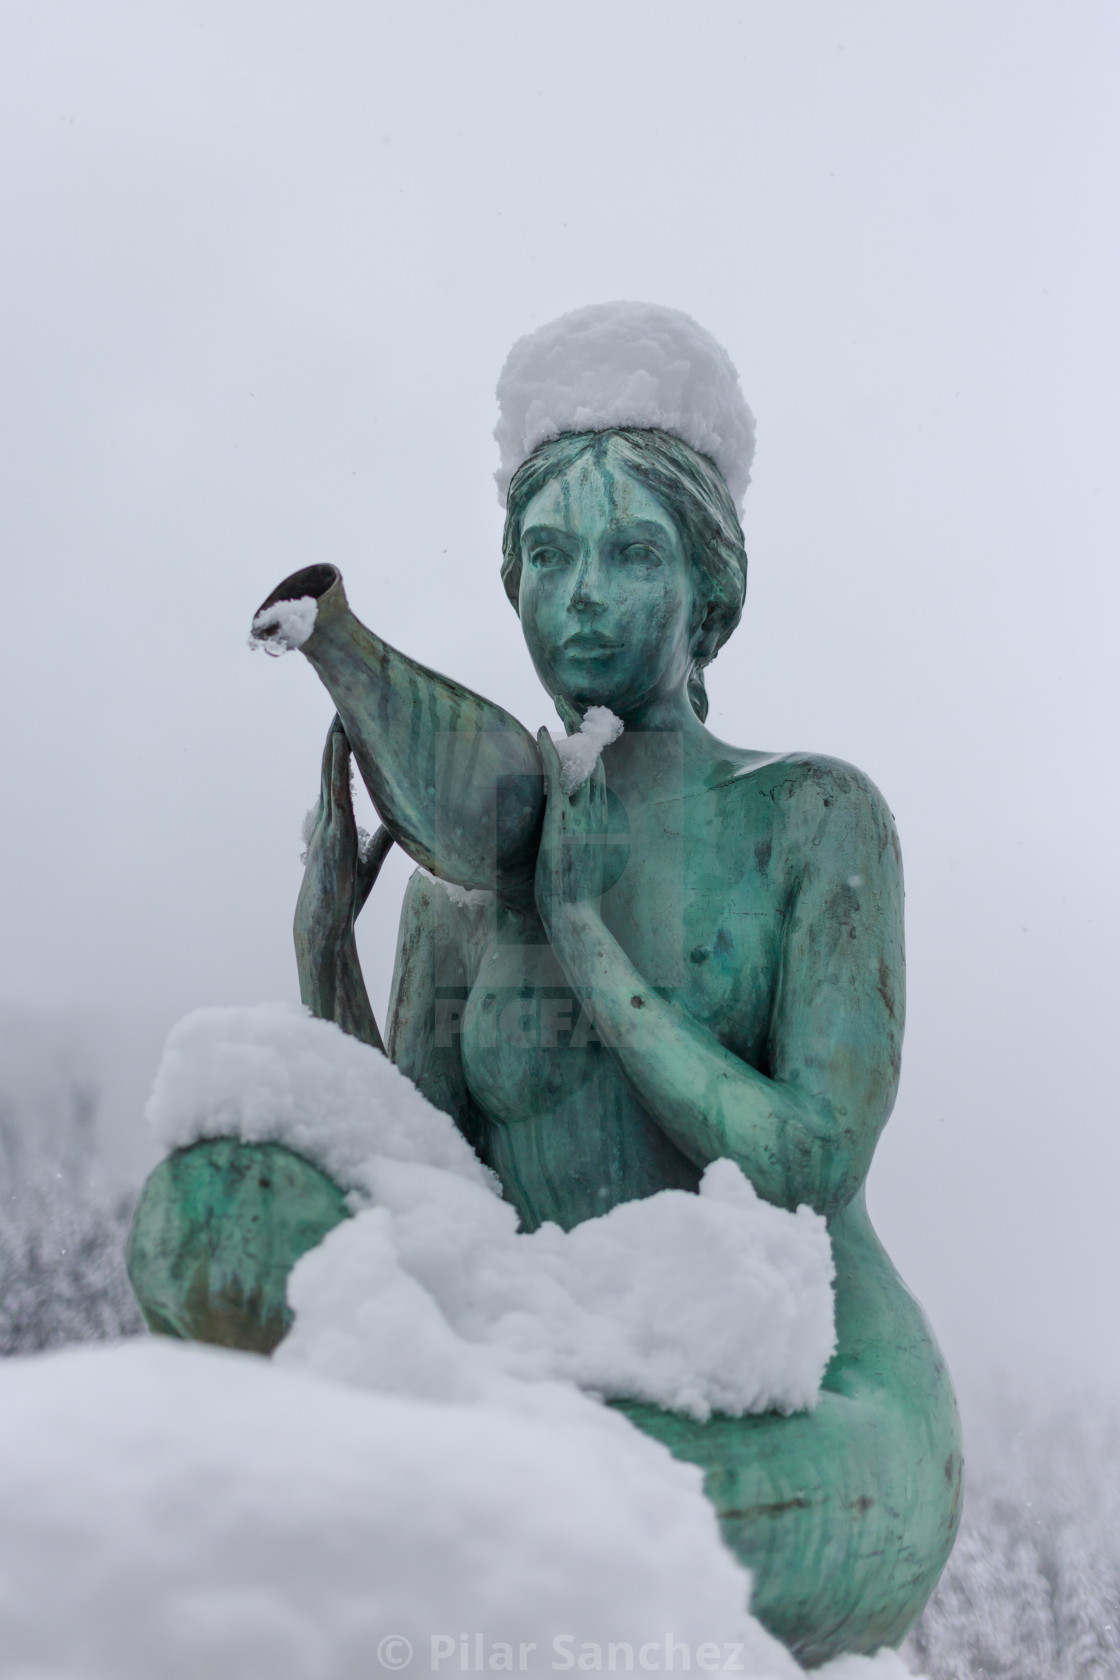 "Bronze statue in the snow" stock image